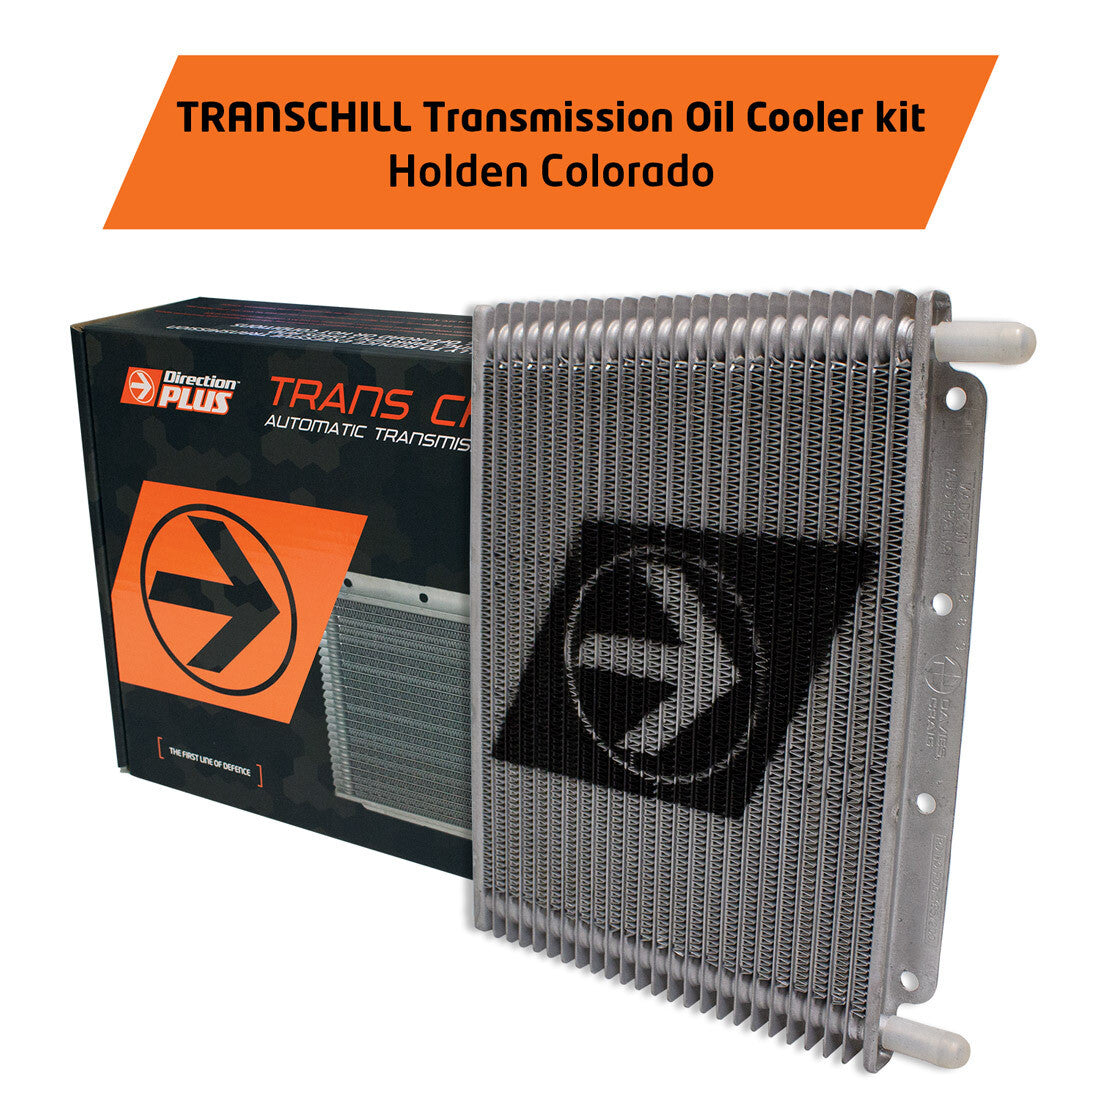 Transchill Transmission Cooler Kit - Holden Colorado